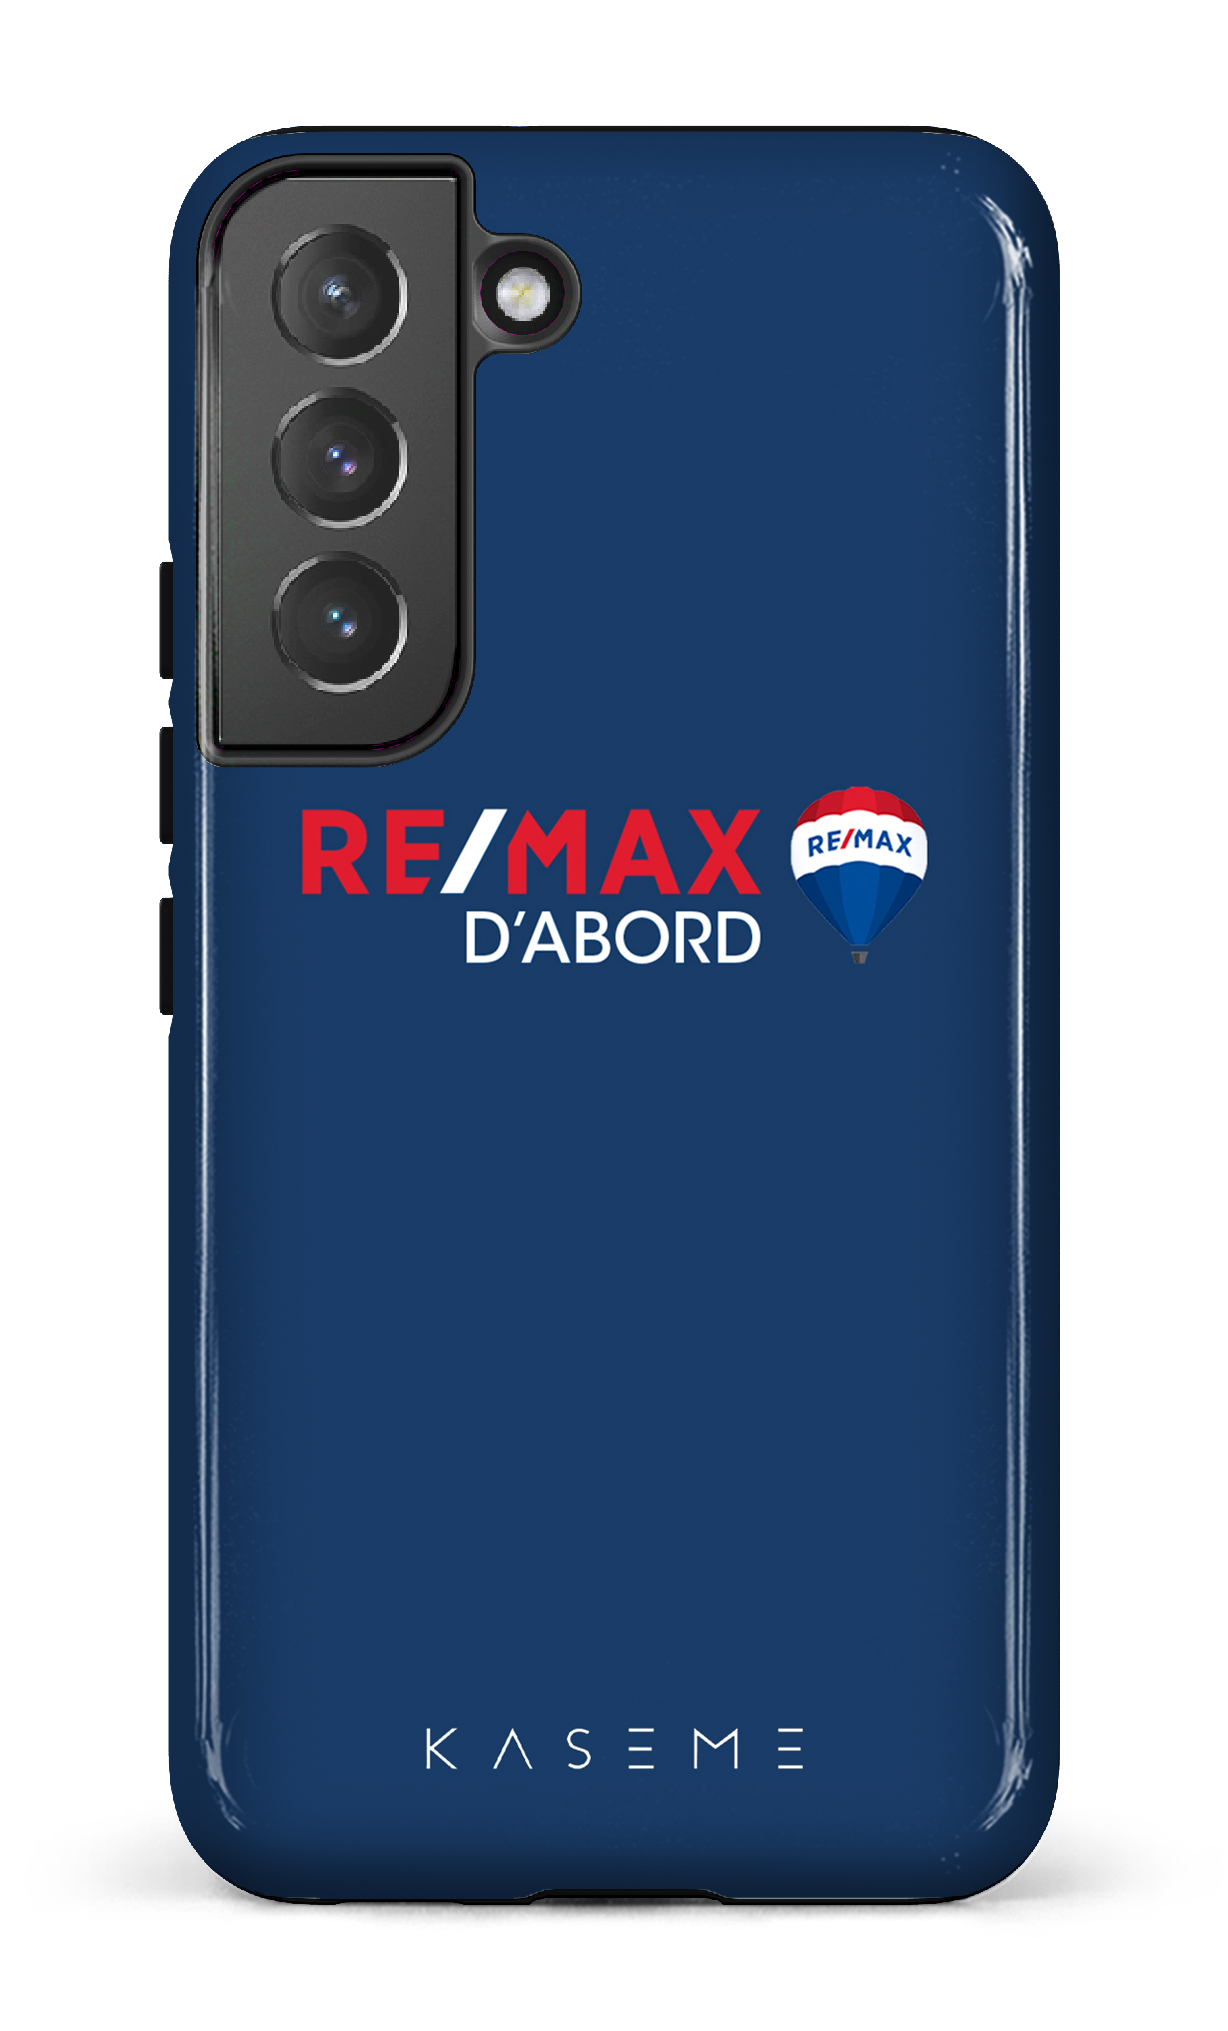 Remax D'abord Bleu - Galaxy S22